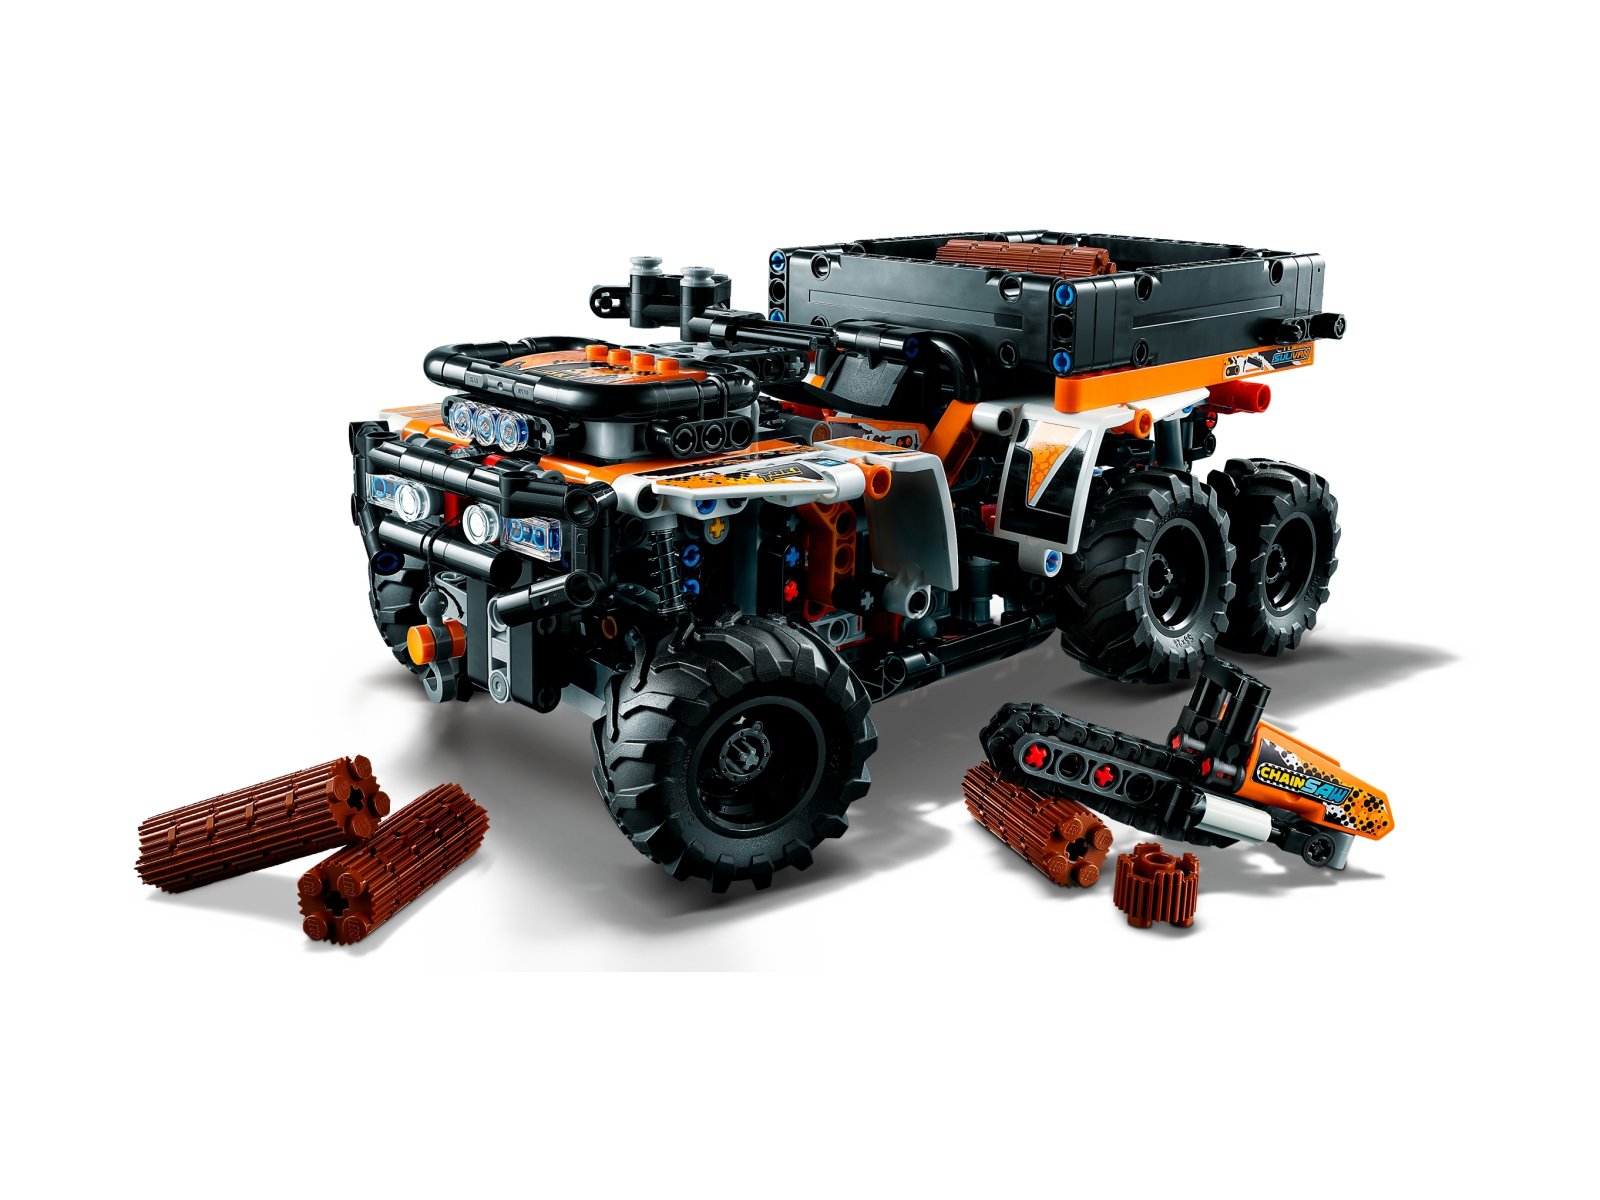 LEGO Technic Pojazd terenowy 42139